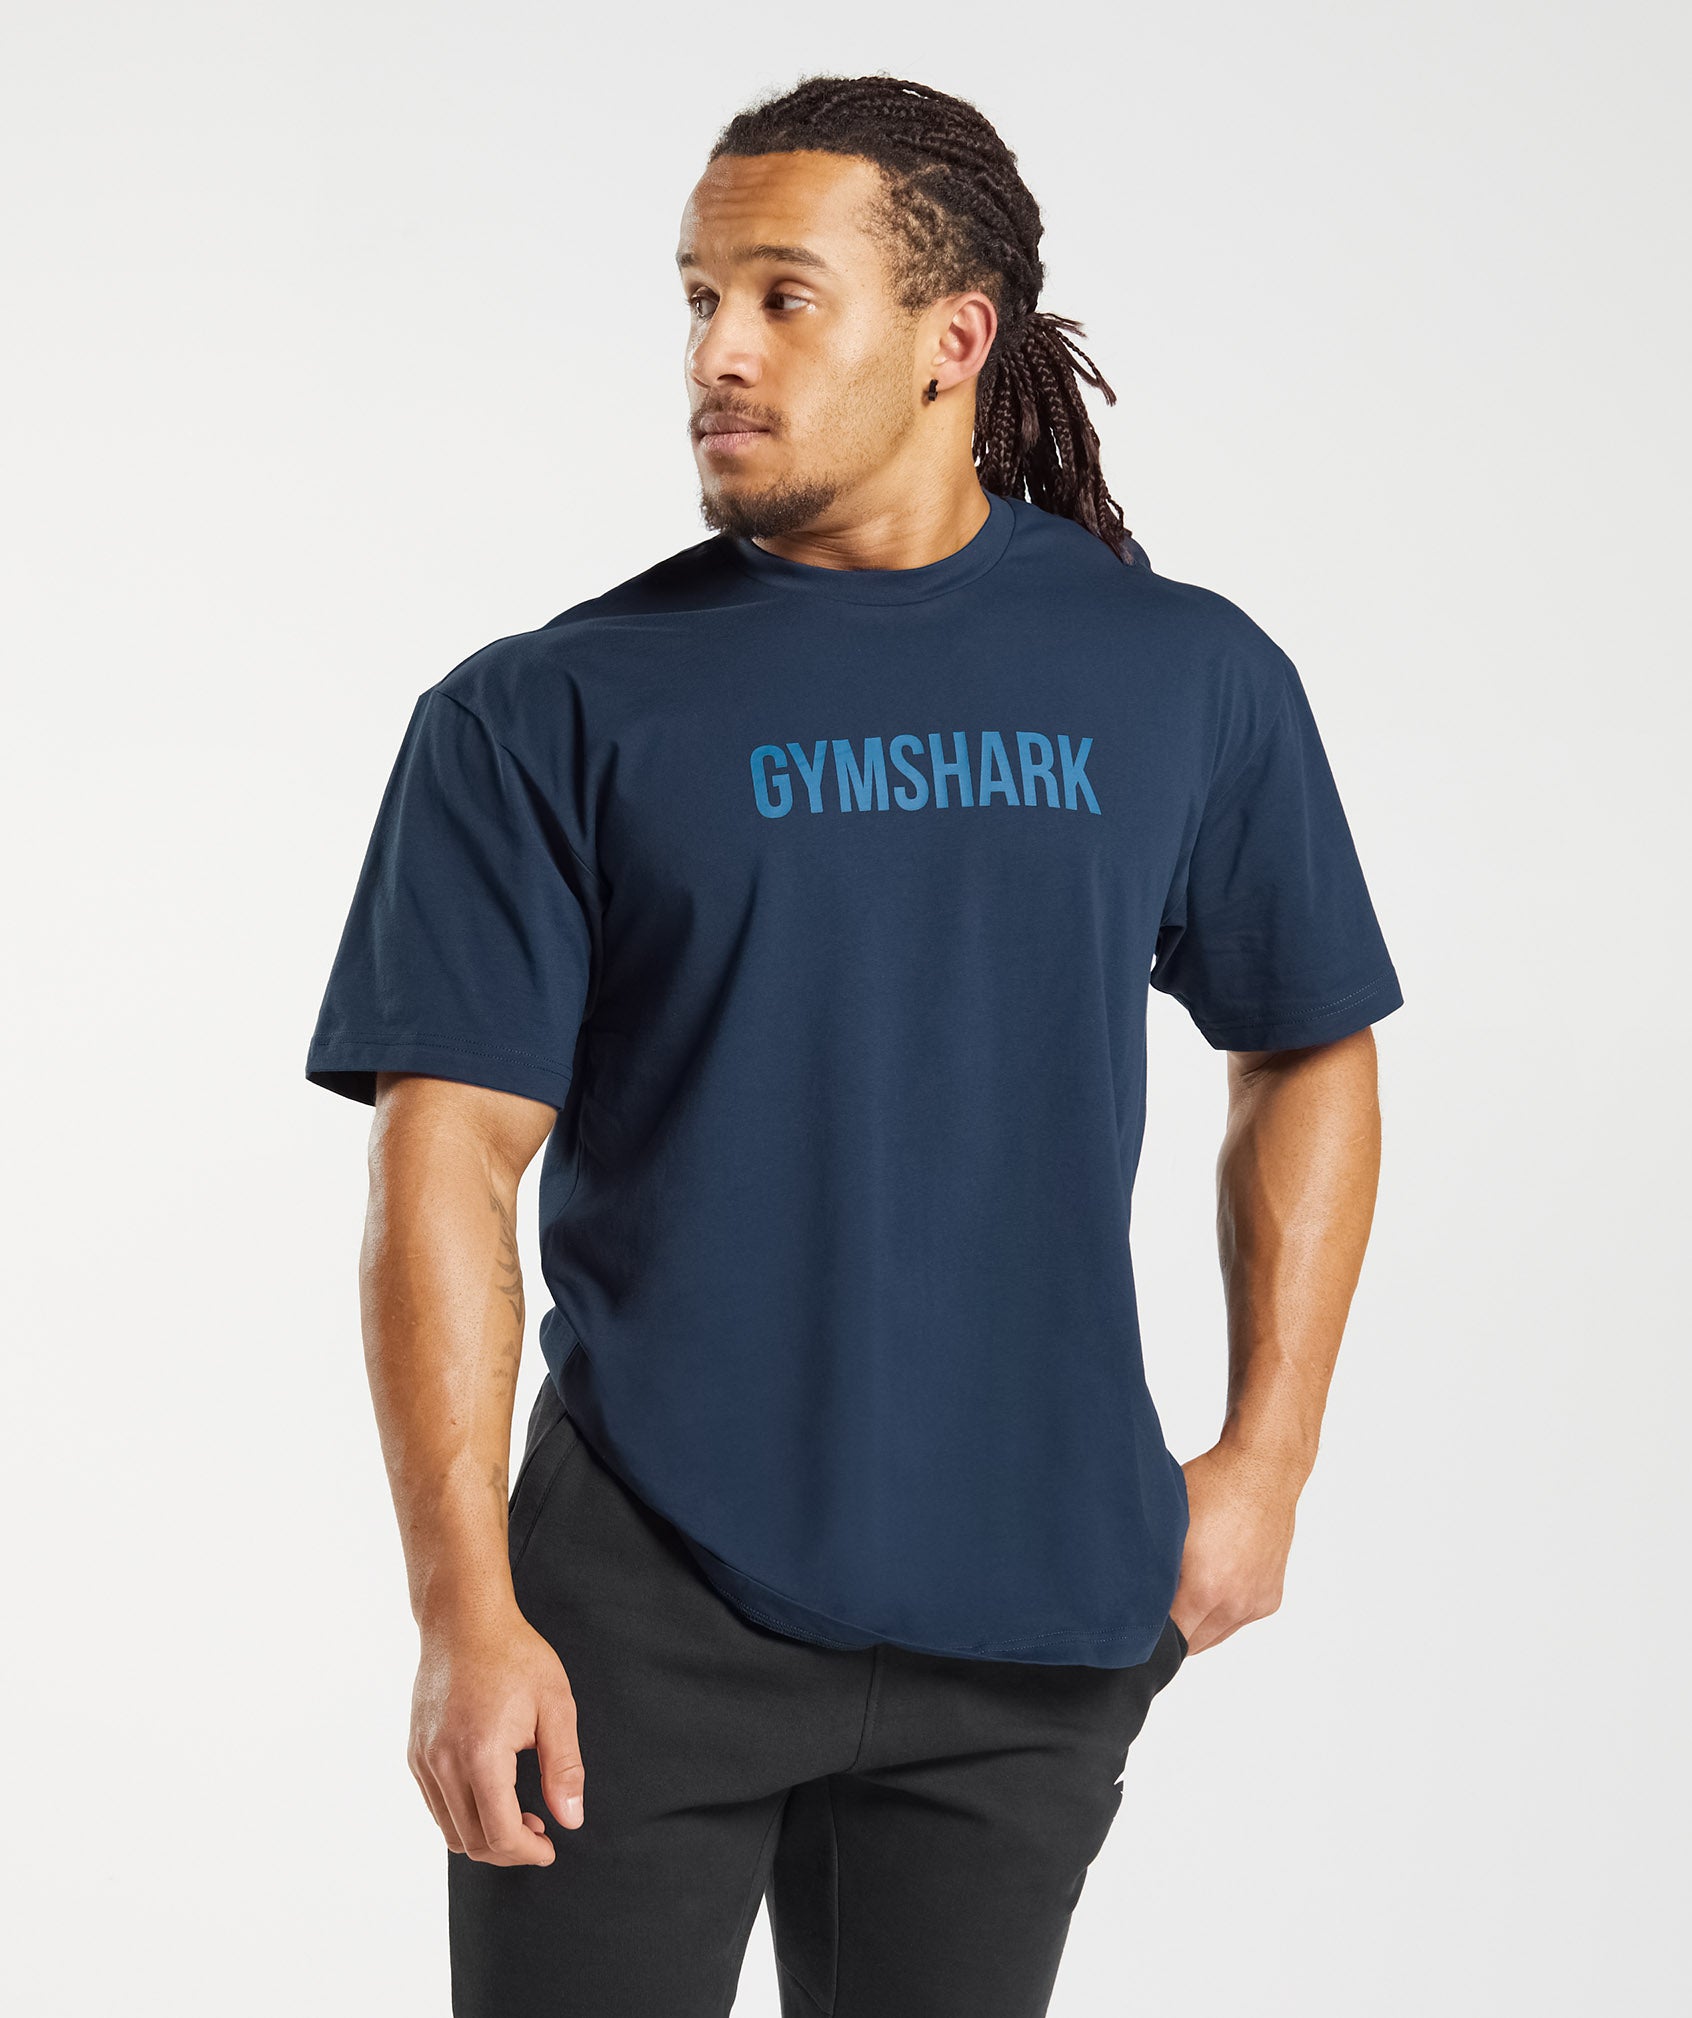 Gymshark Loja - Camiseta Gymshark Homem Apollo Azul Marinho - Roupa Gymshark  Portugal